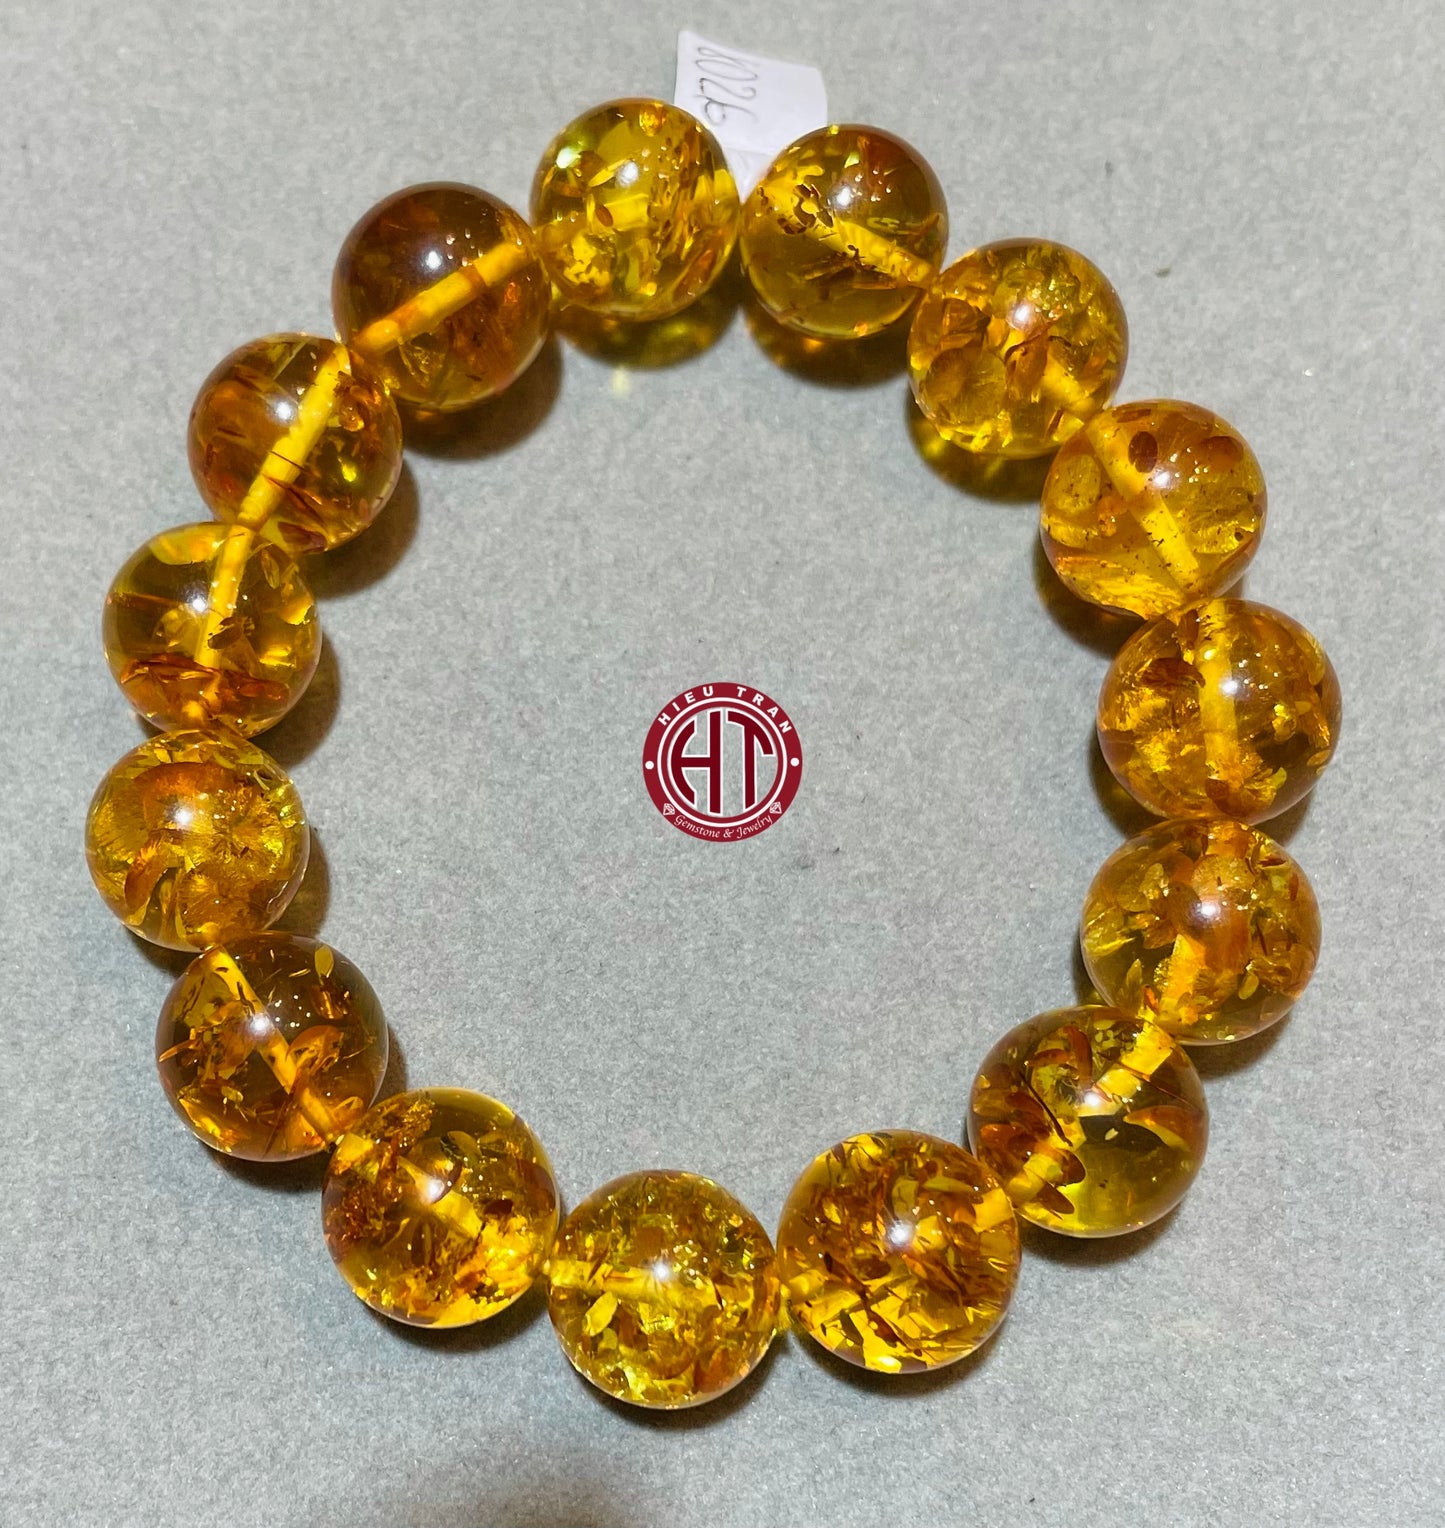 Myanmar Amber Bracelet 14+mm #8026